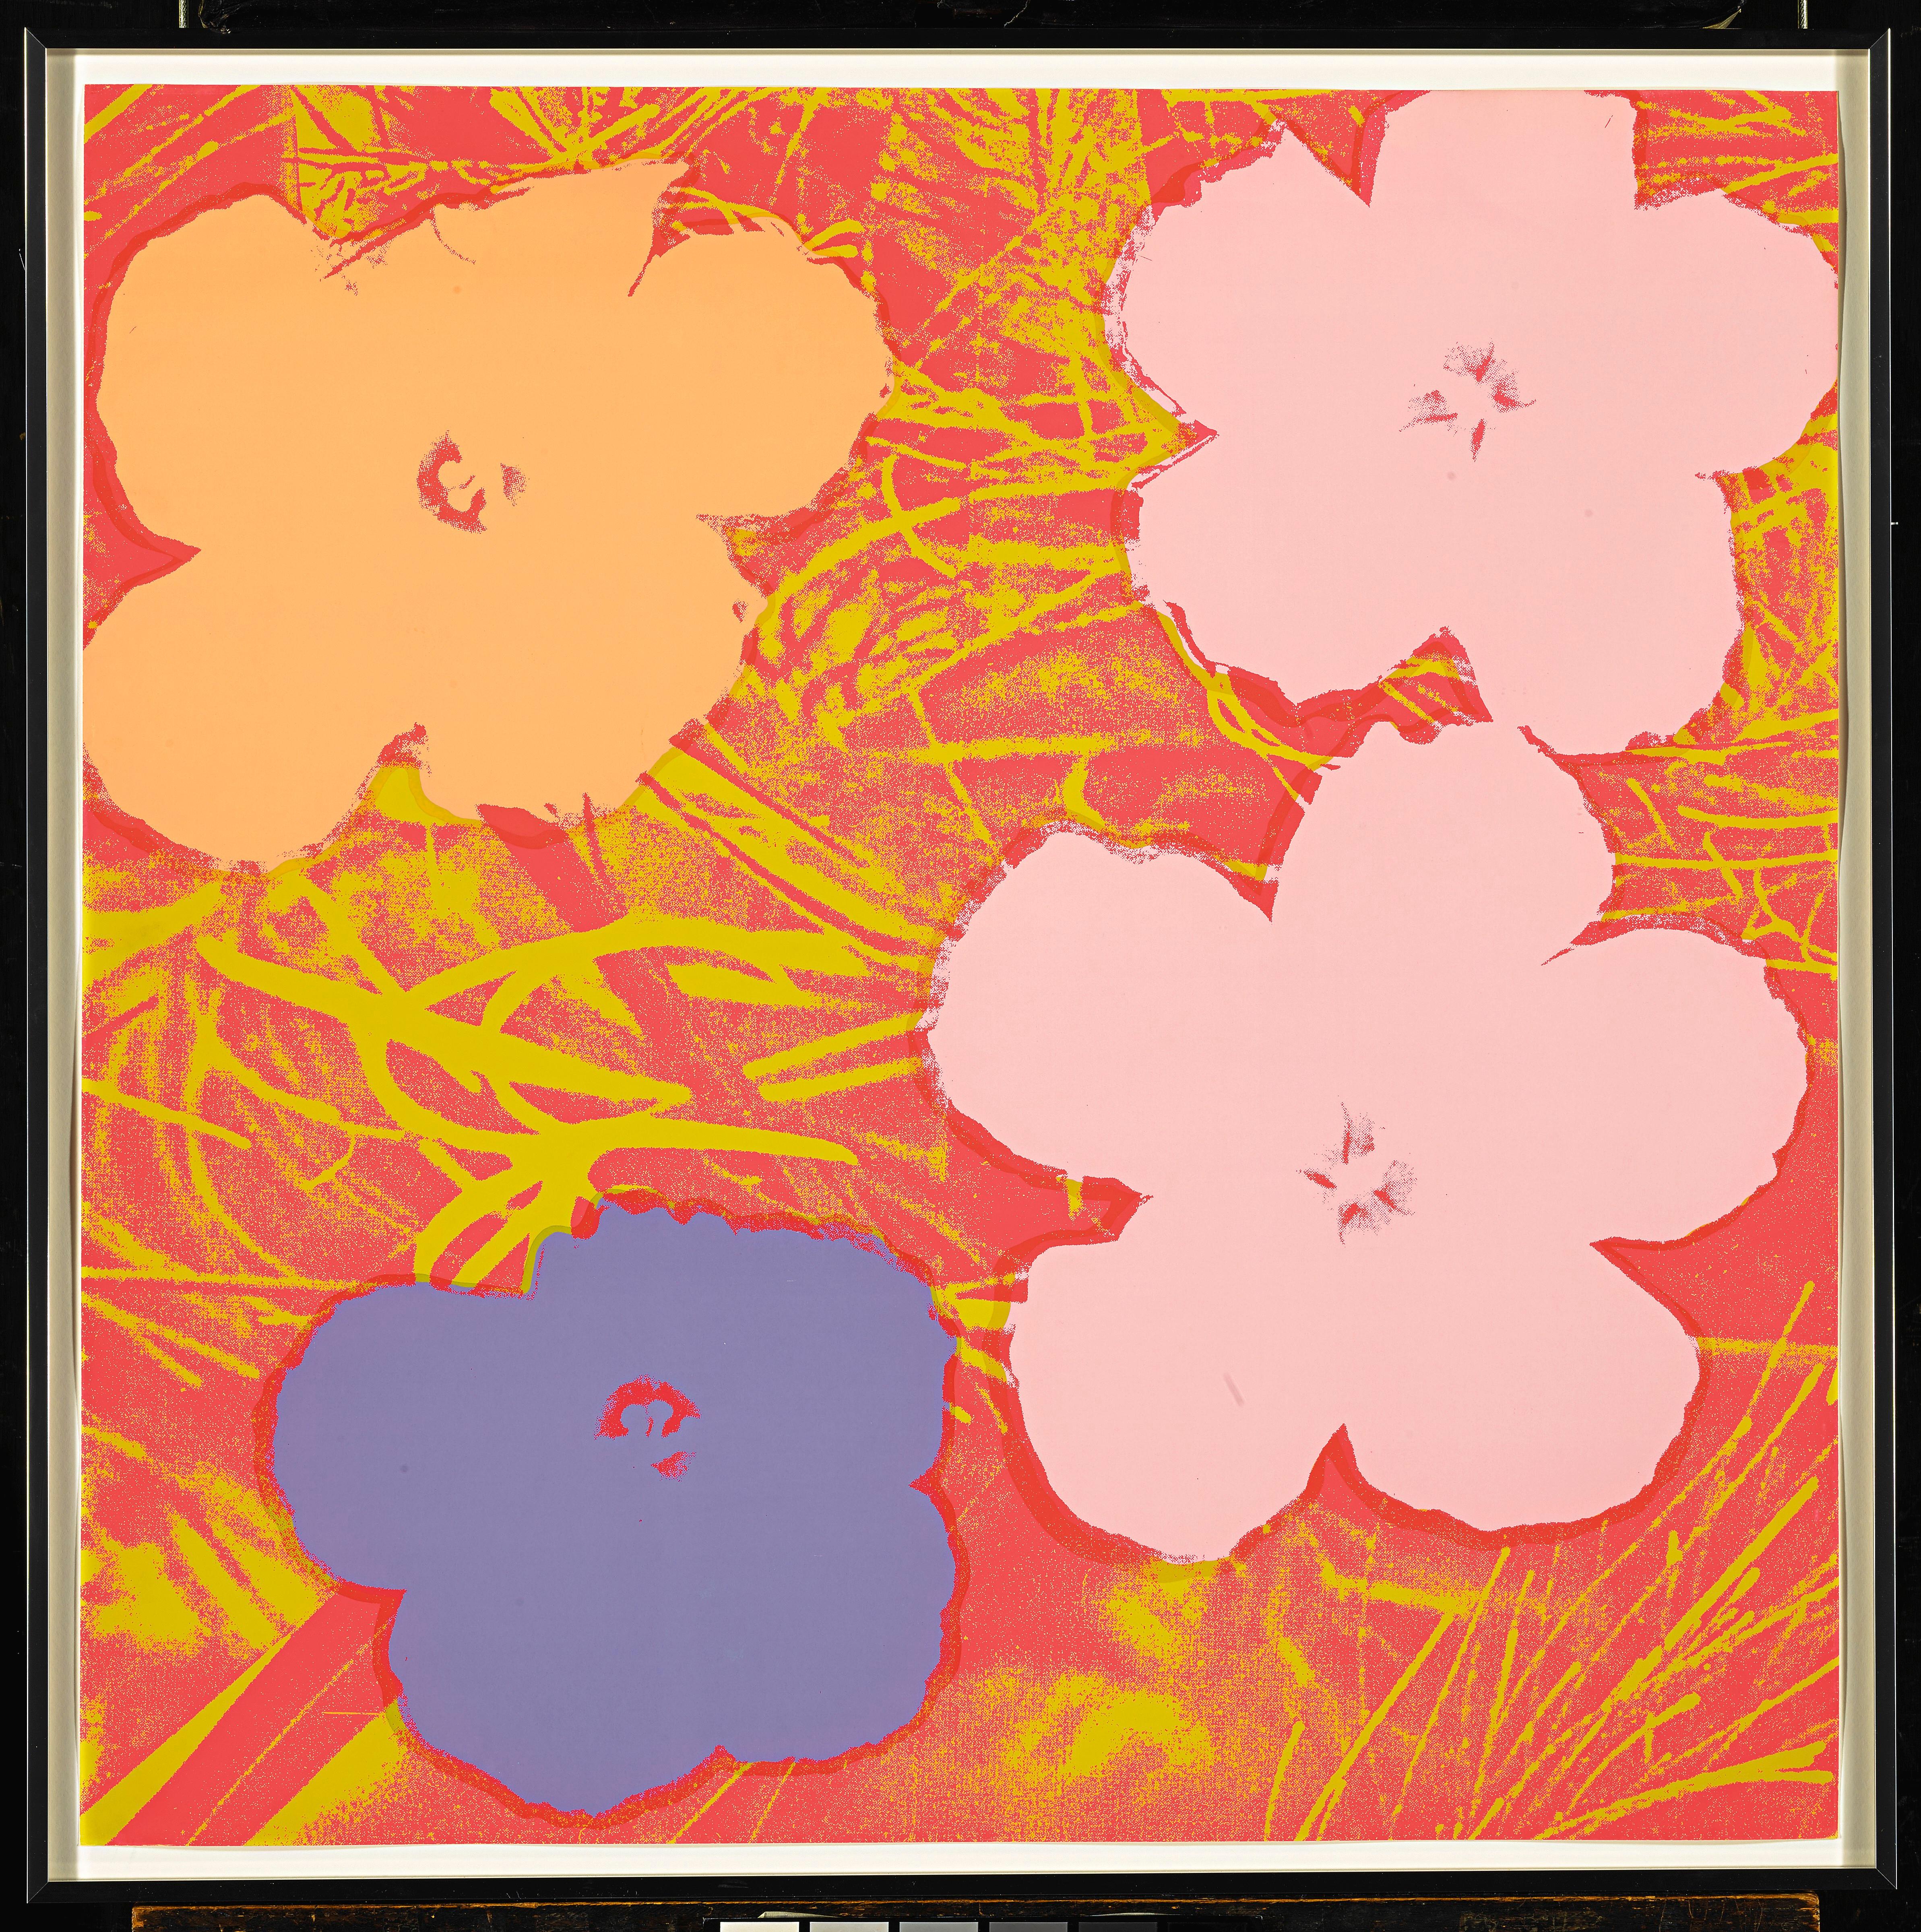 Flowers F&S II.69 - Print by Andy Warhol